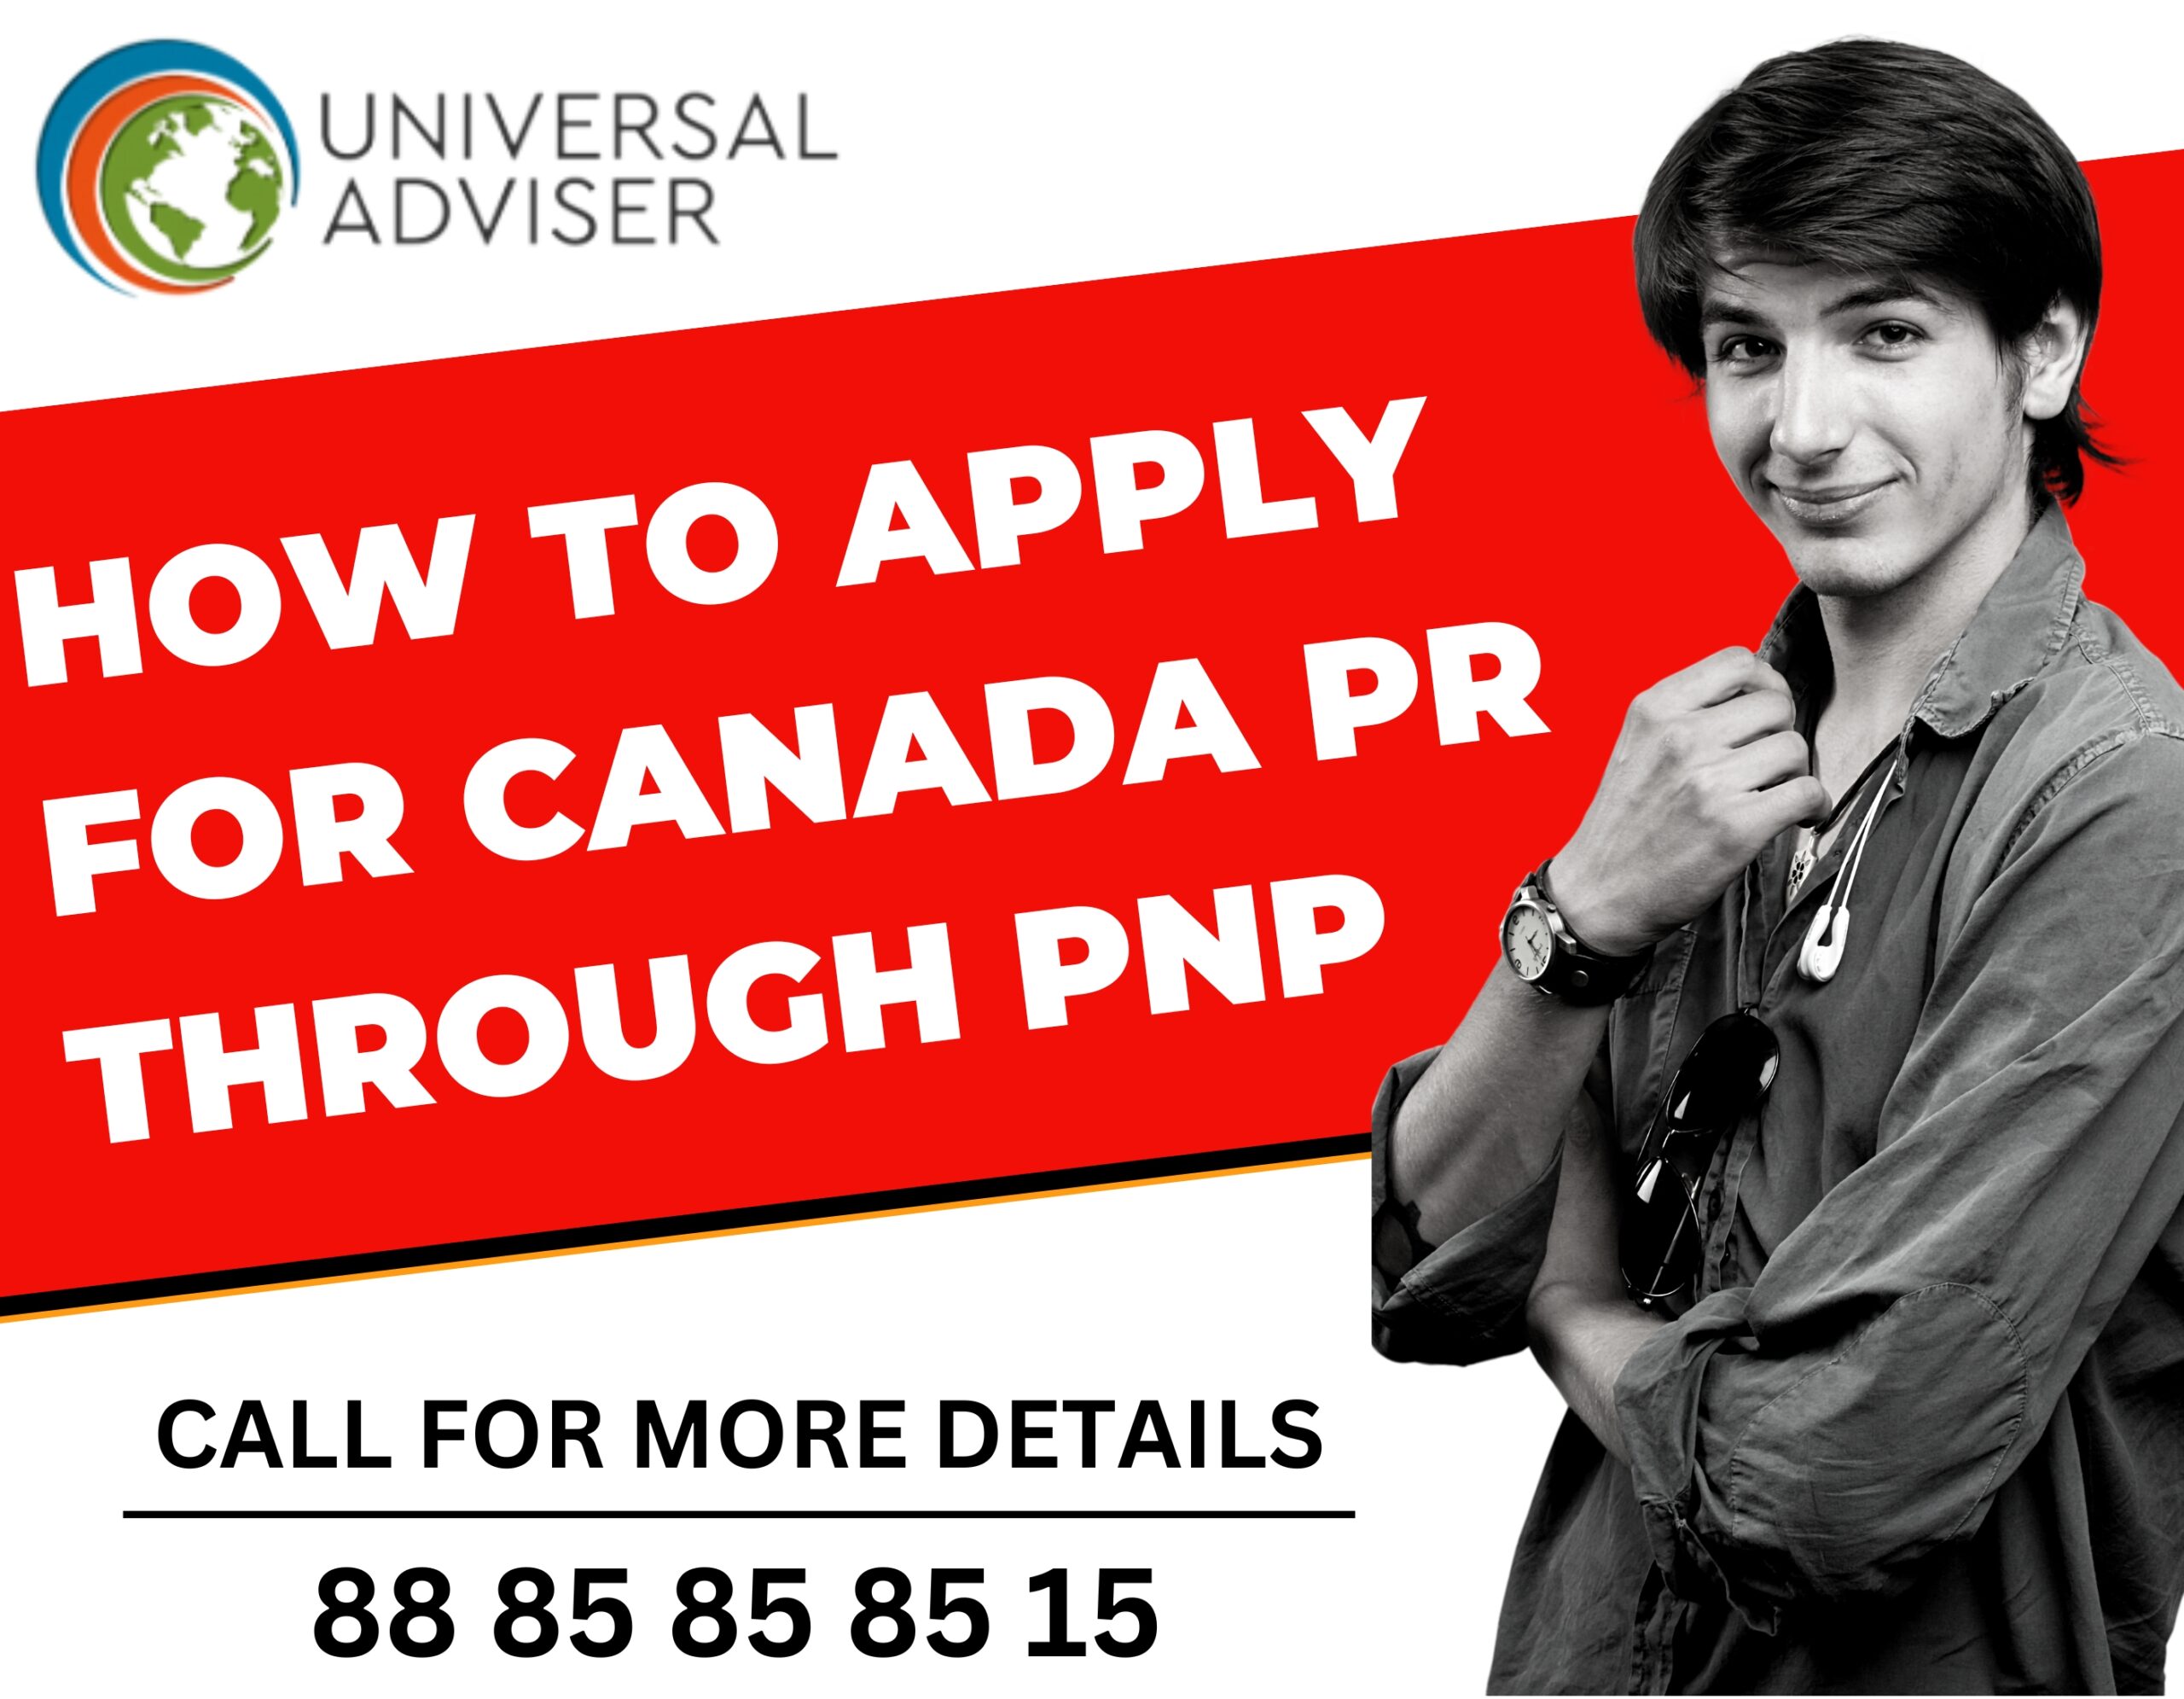 How to Apply for Canada PR through PNP